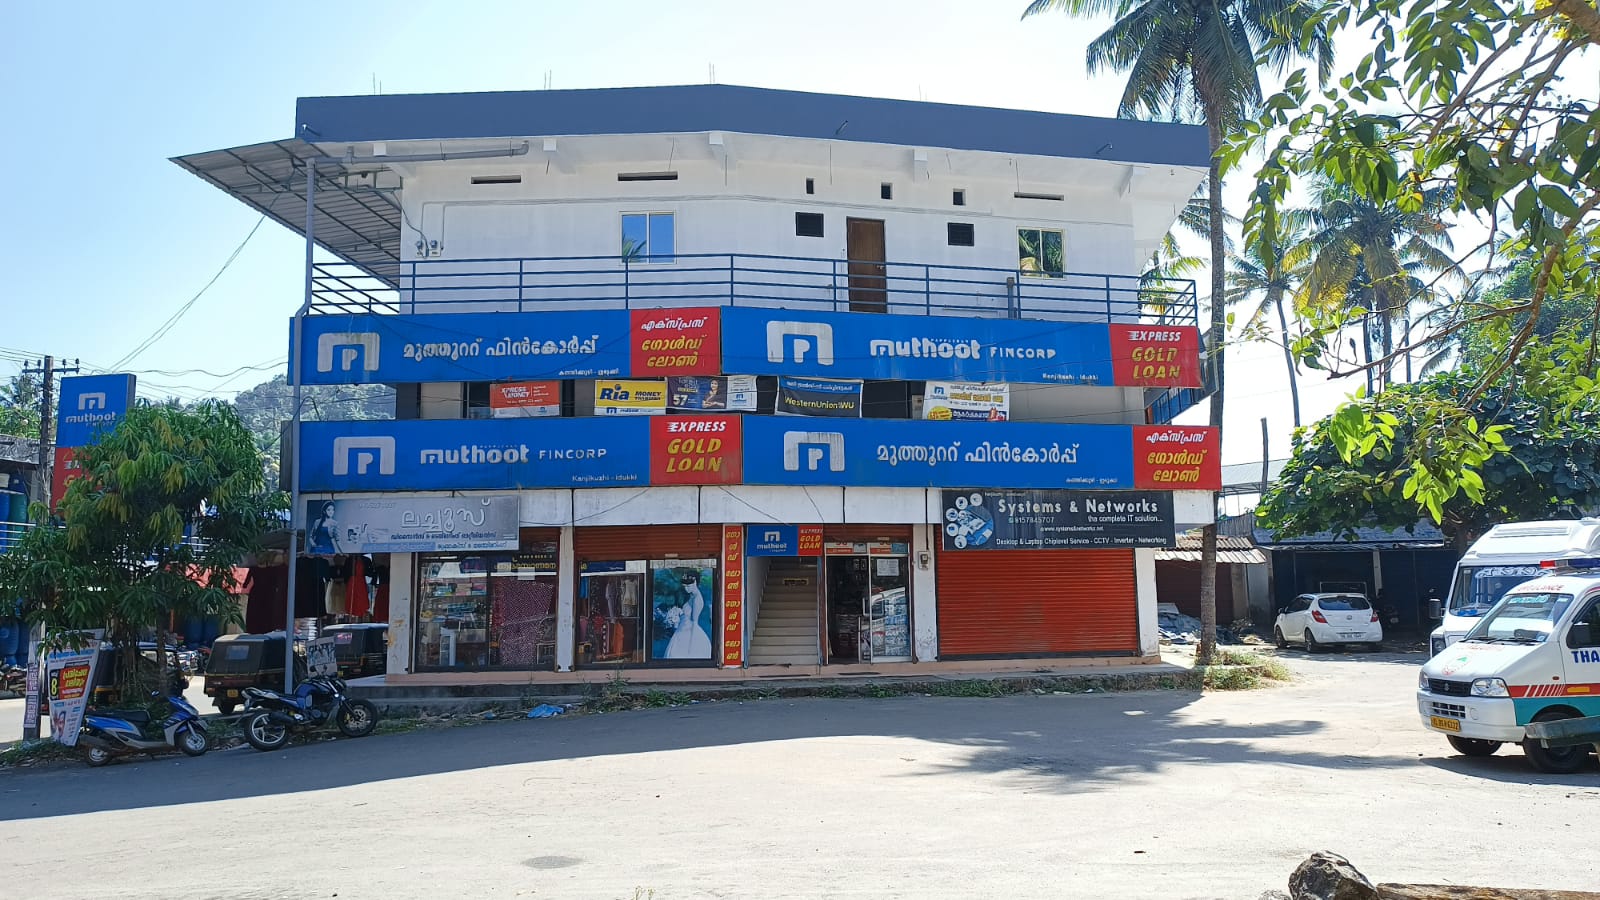 Muthoot Fincorp Gold Loan Services in Kanjikuzhy, Idukki, Kerala